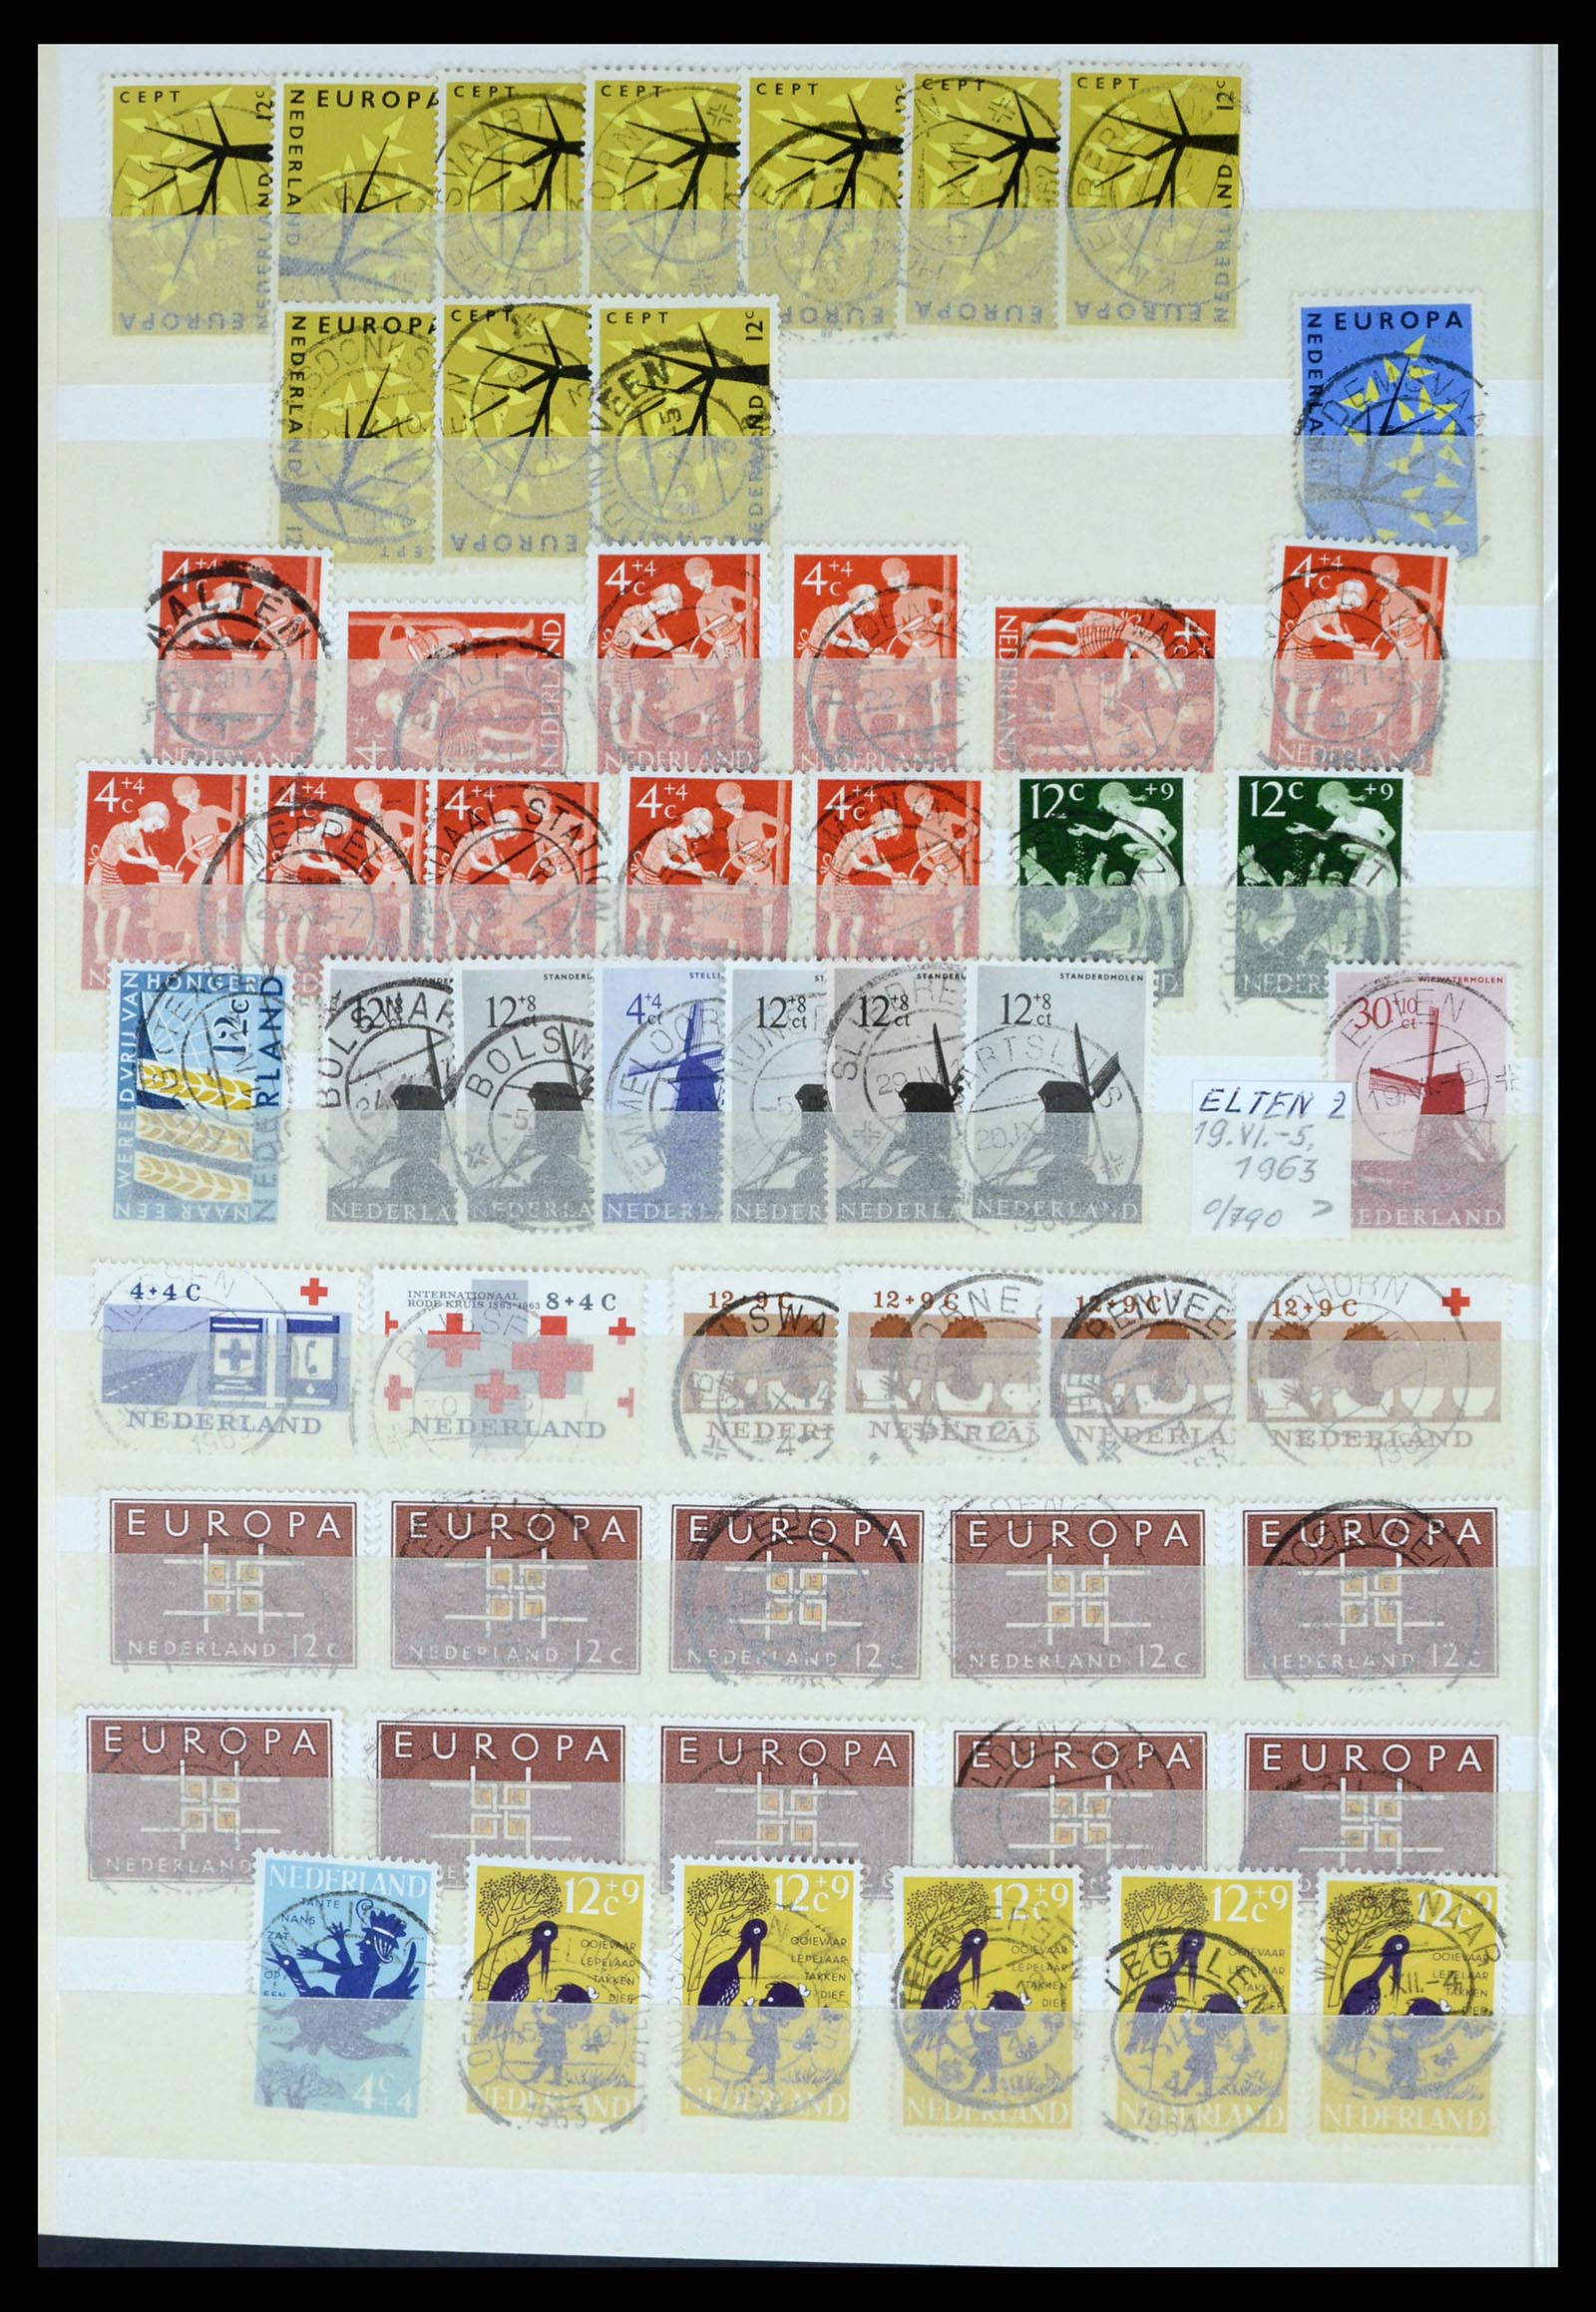 37424 056 - Stamp collection 37424 Netherlands shortbar cancels.